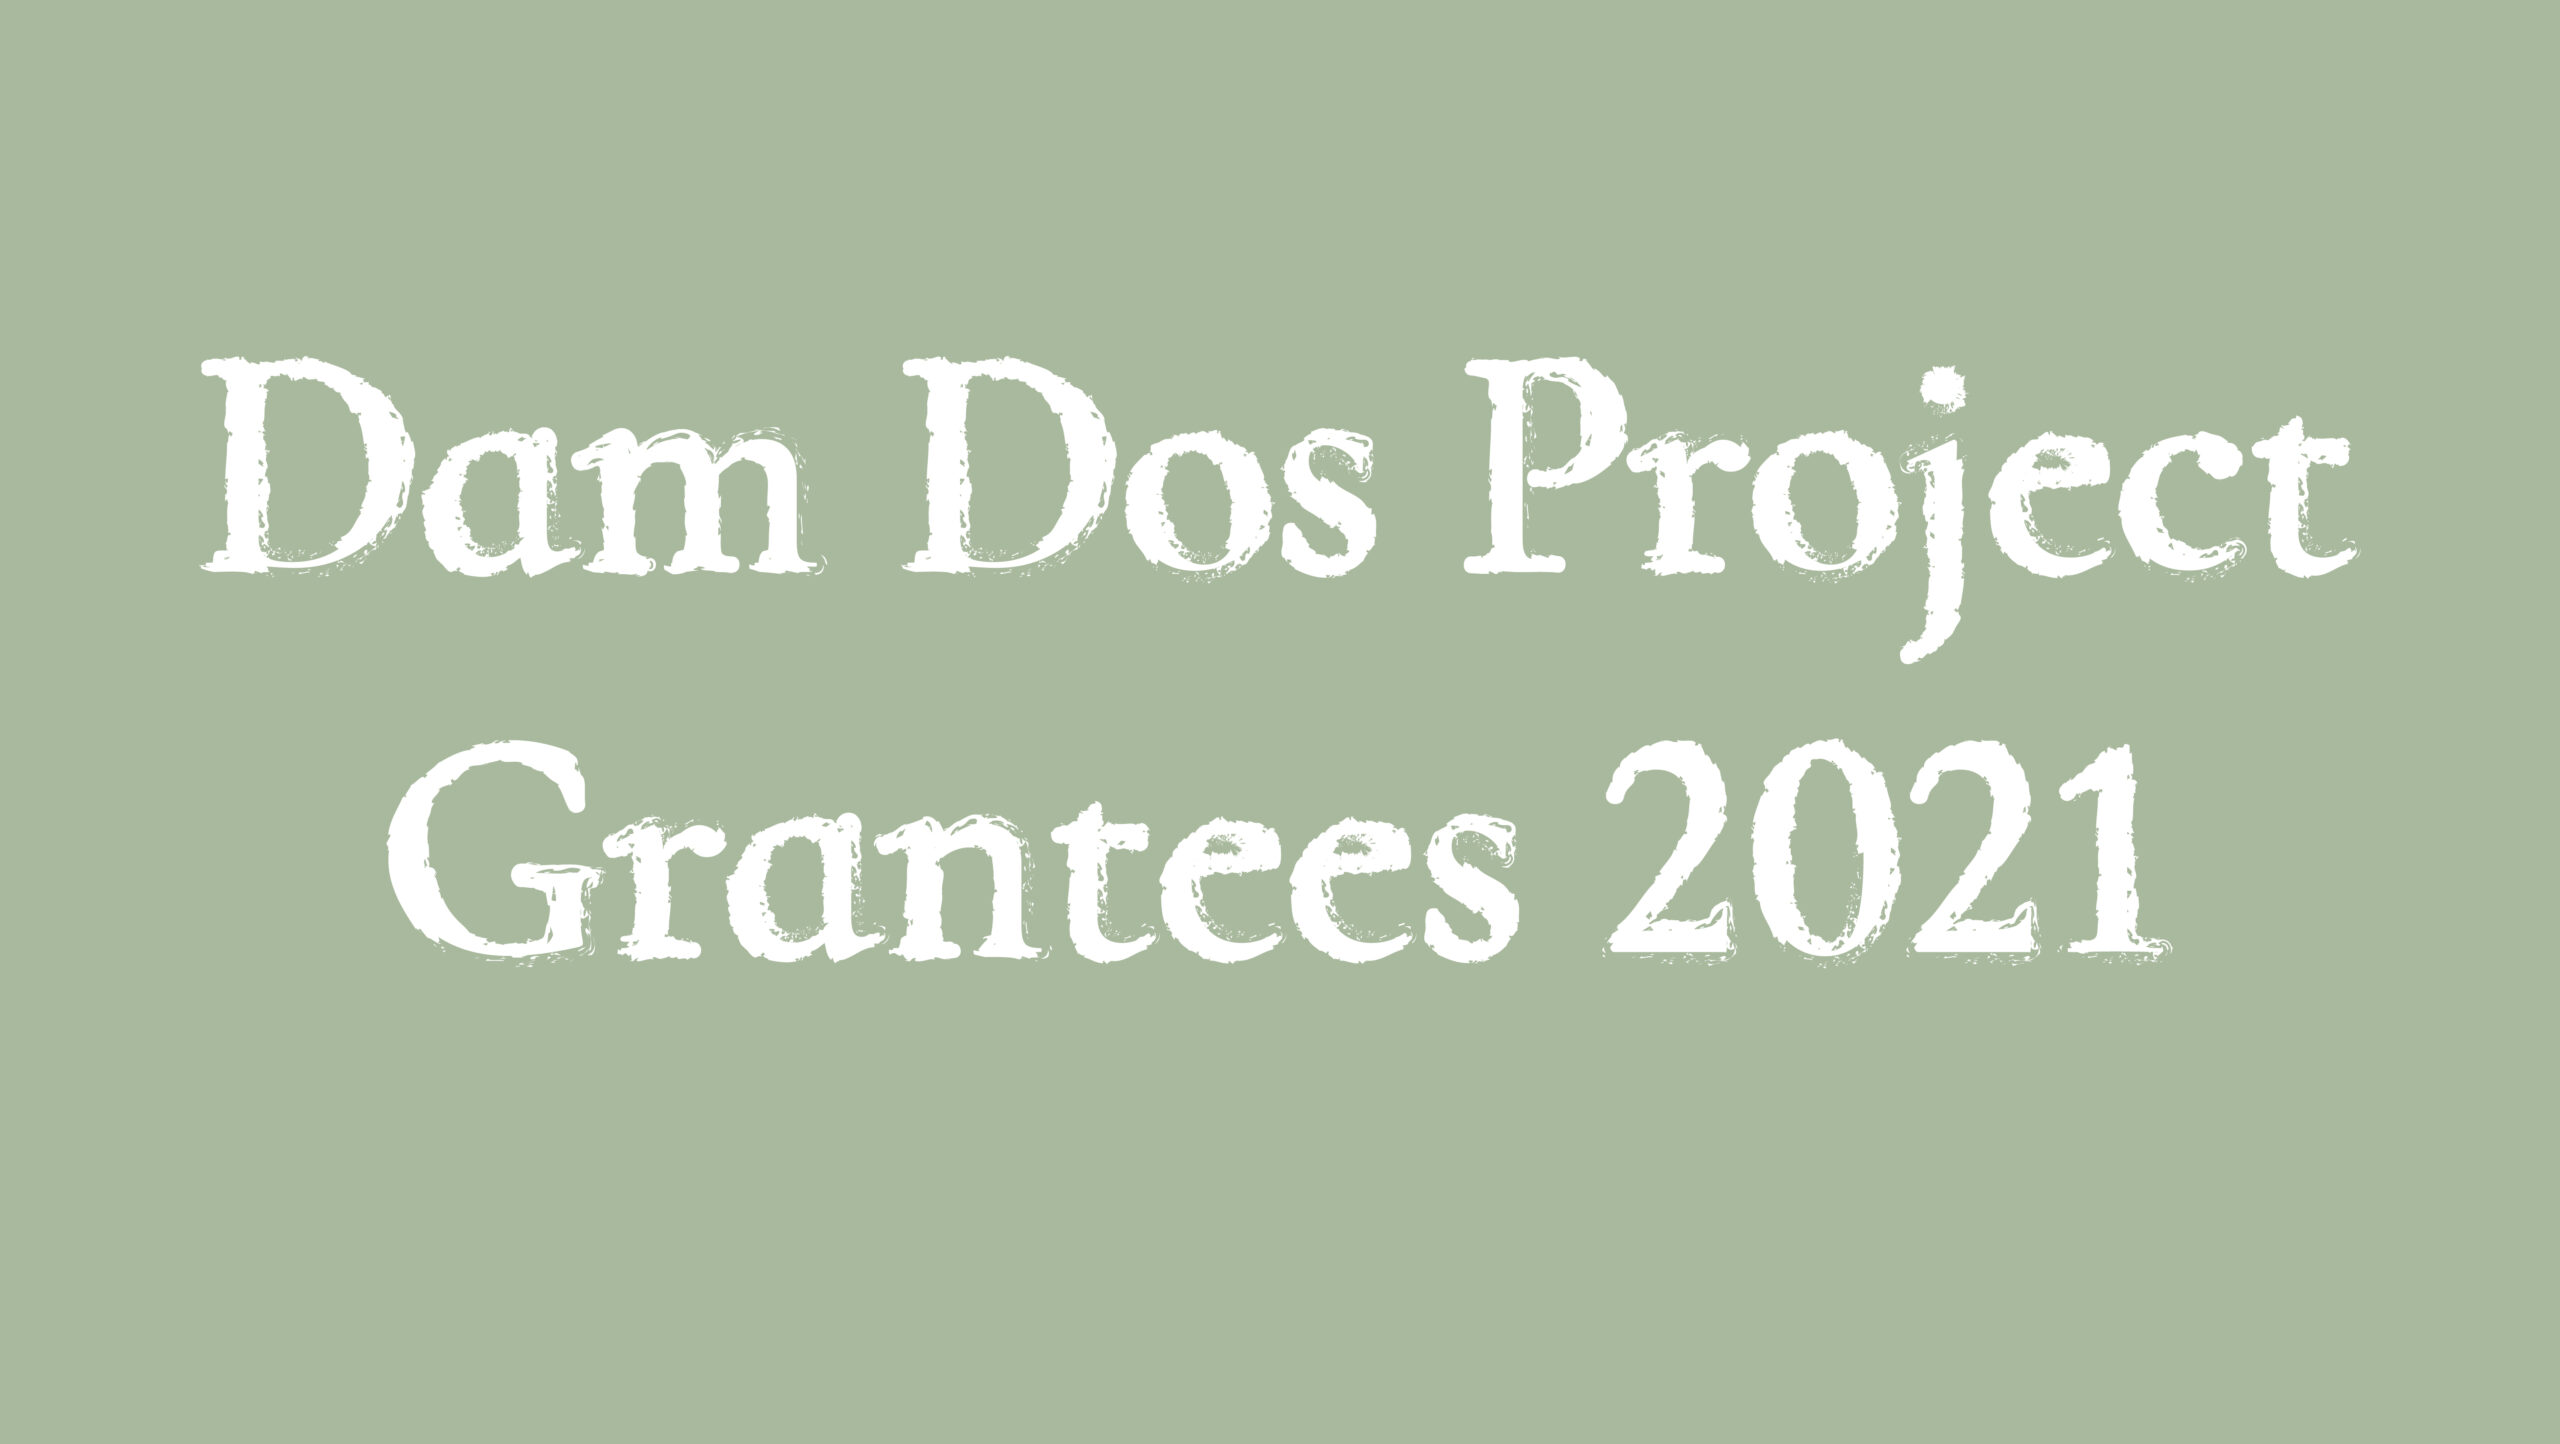 Dam Dos Project Grantees 2021